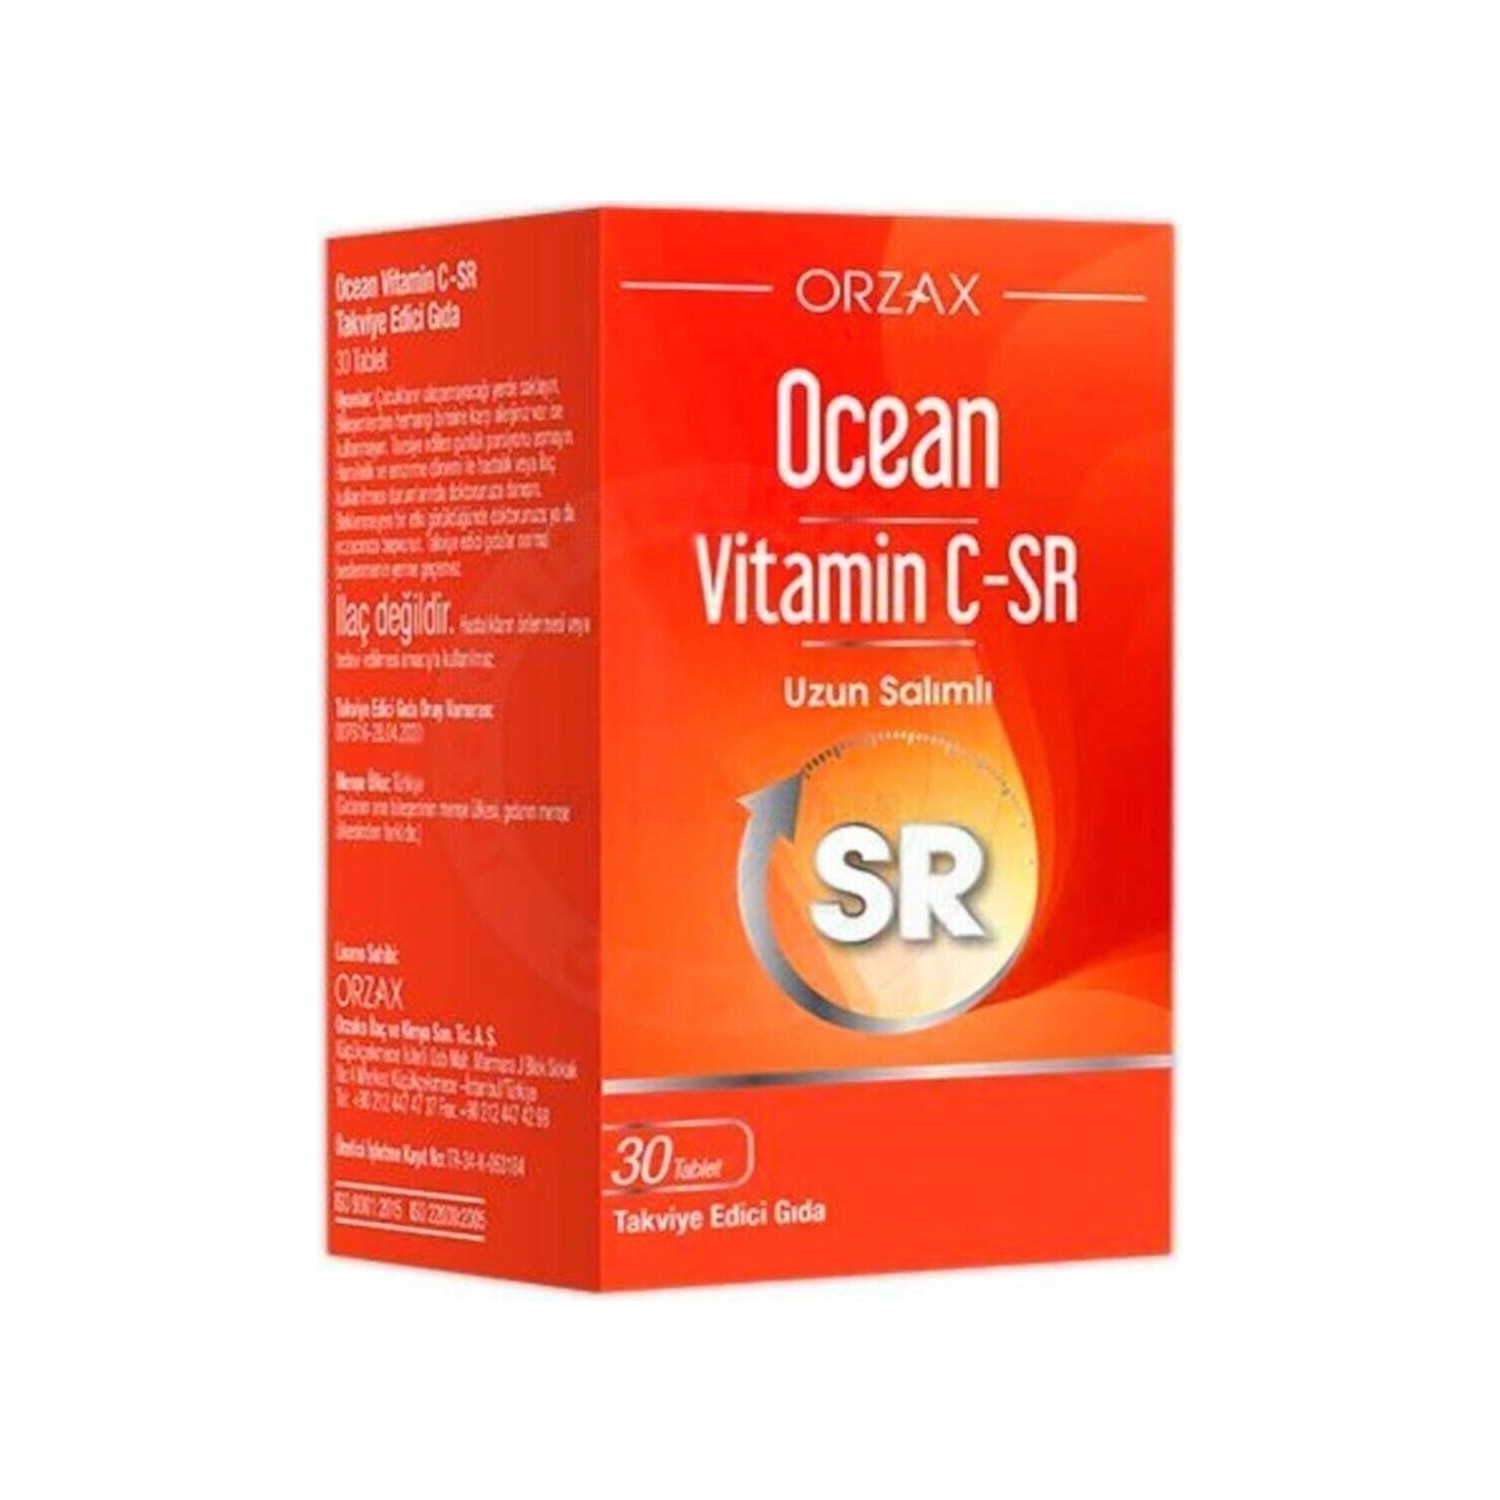 Витамин C-Sr Ocean 500 мг, 30 таблеток витамин c sr orzax ocean 500 мг 30 таблеток